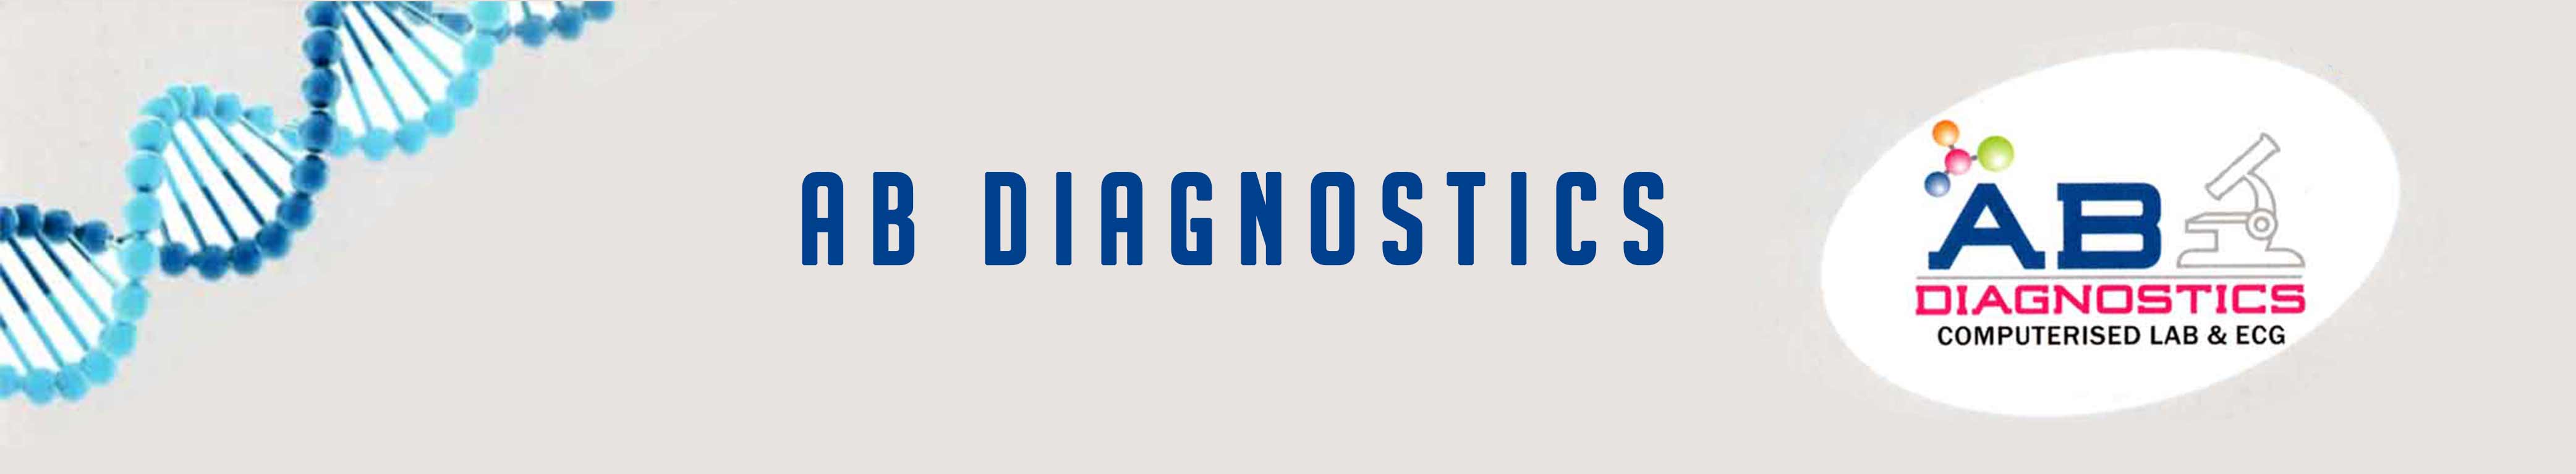 AB Diagnostics Banner Image